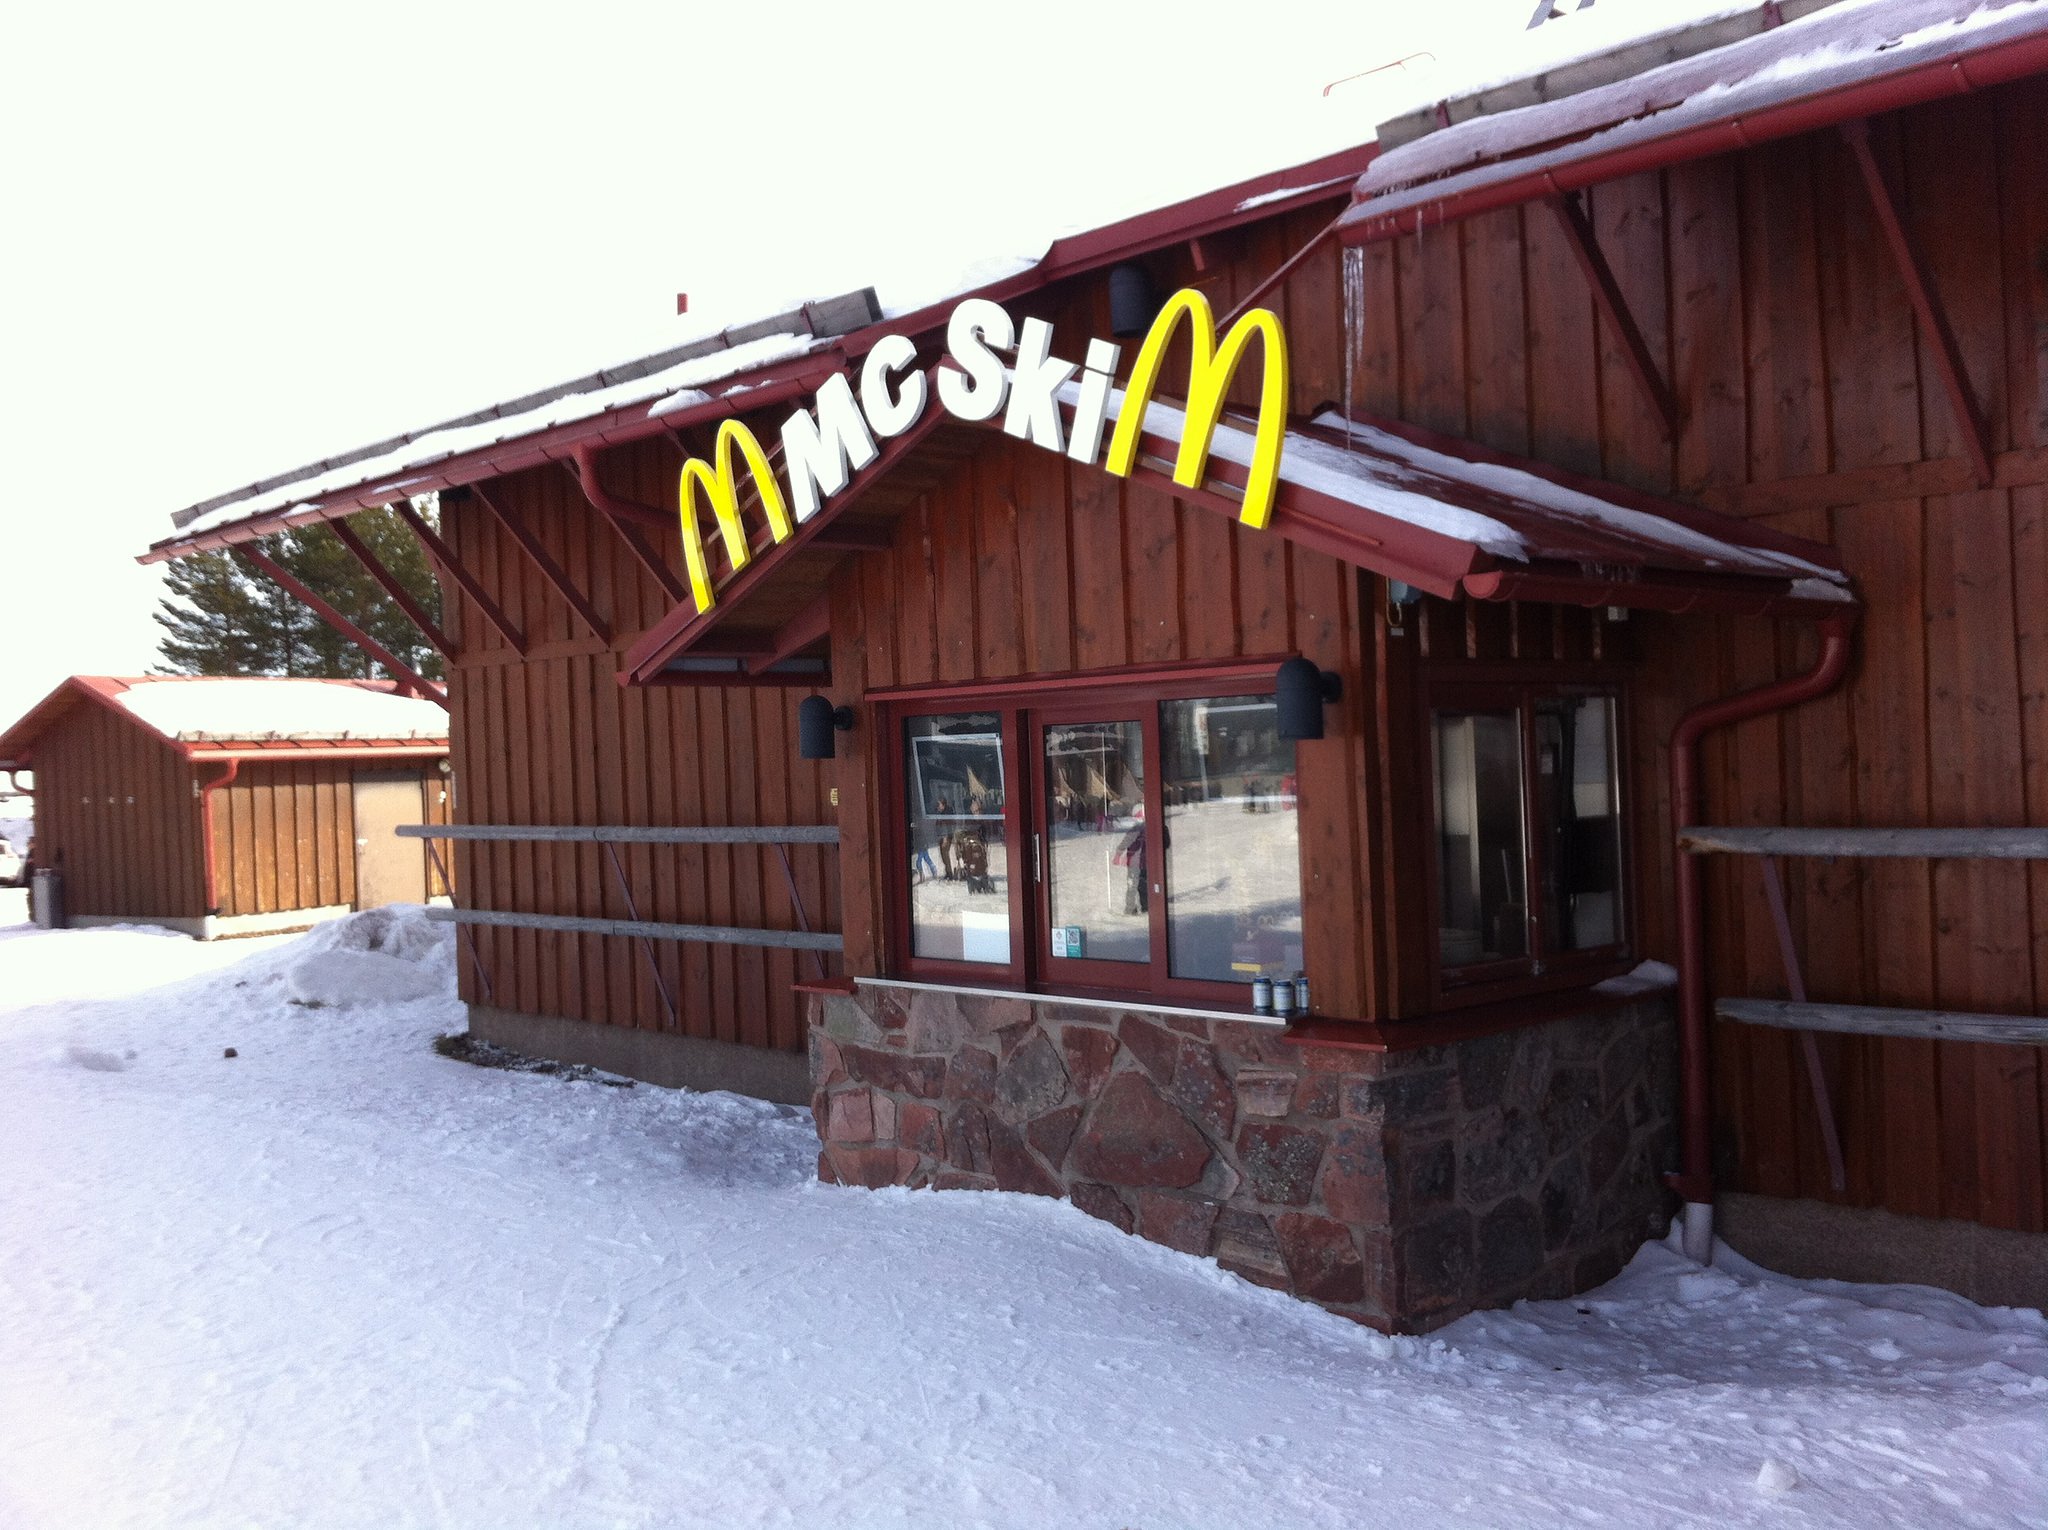 McDonald's has a Ski-Thru in Sweden, apparently.